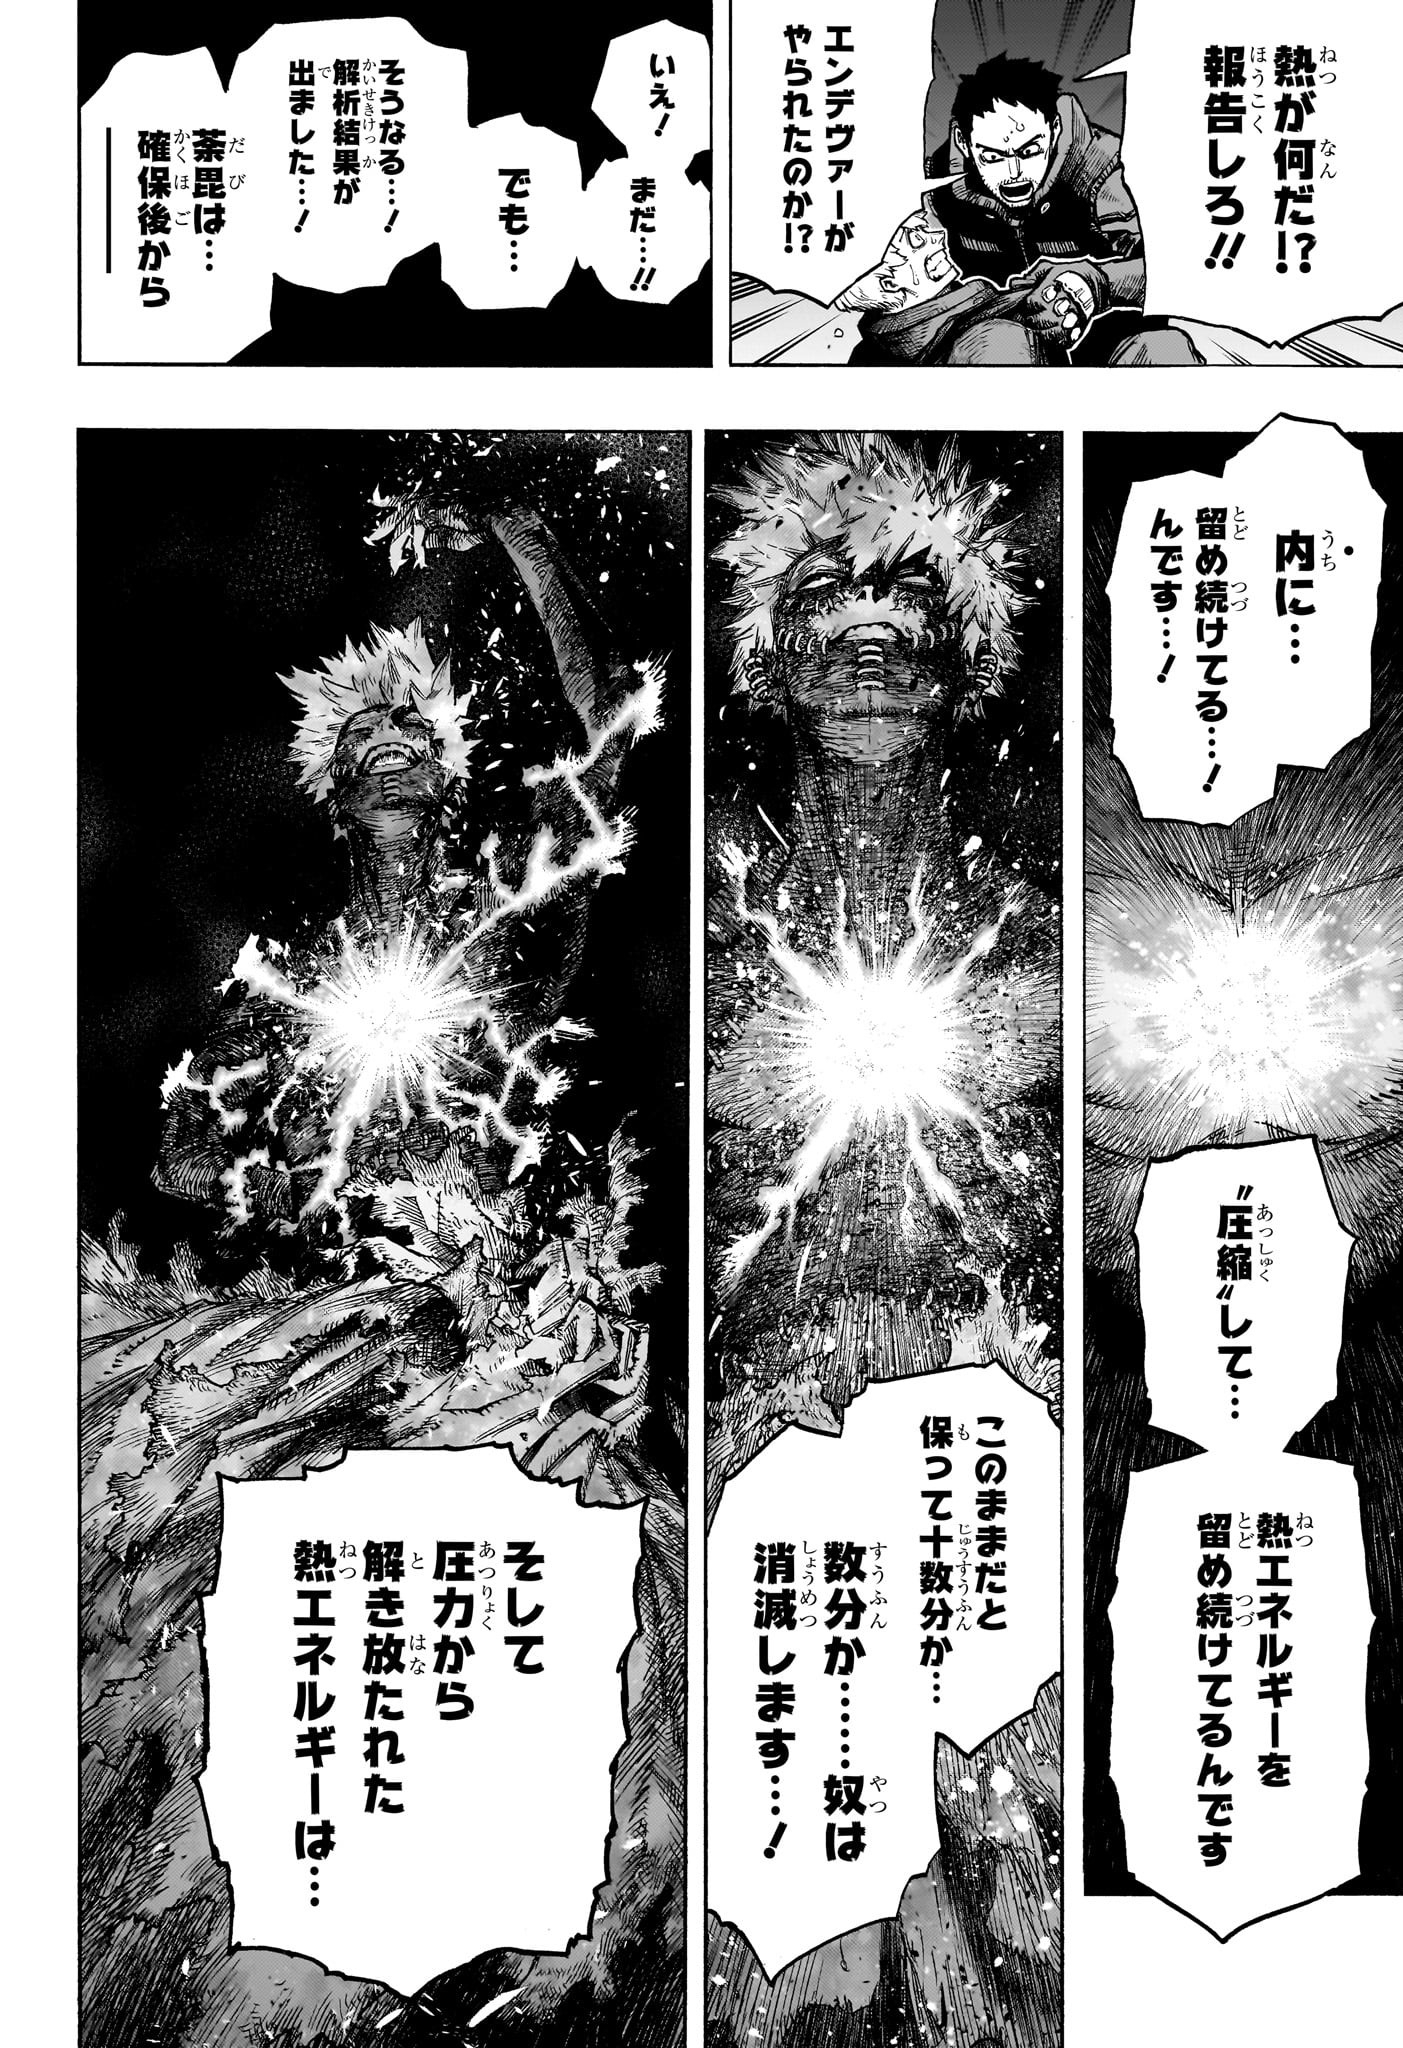 Boku no Hero Academia - Chapter 386 - Page 2